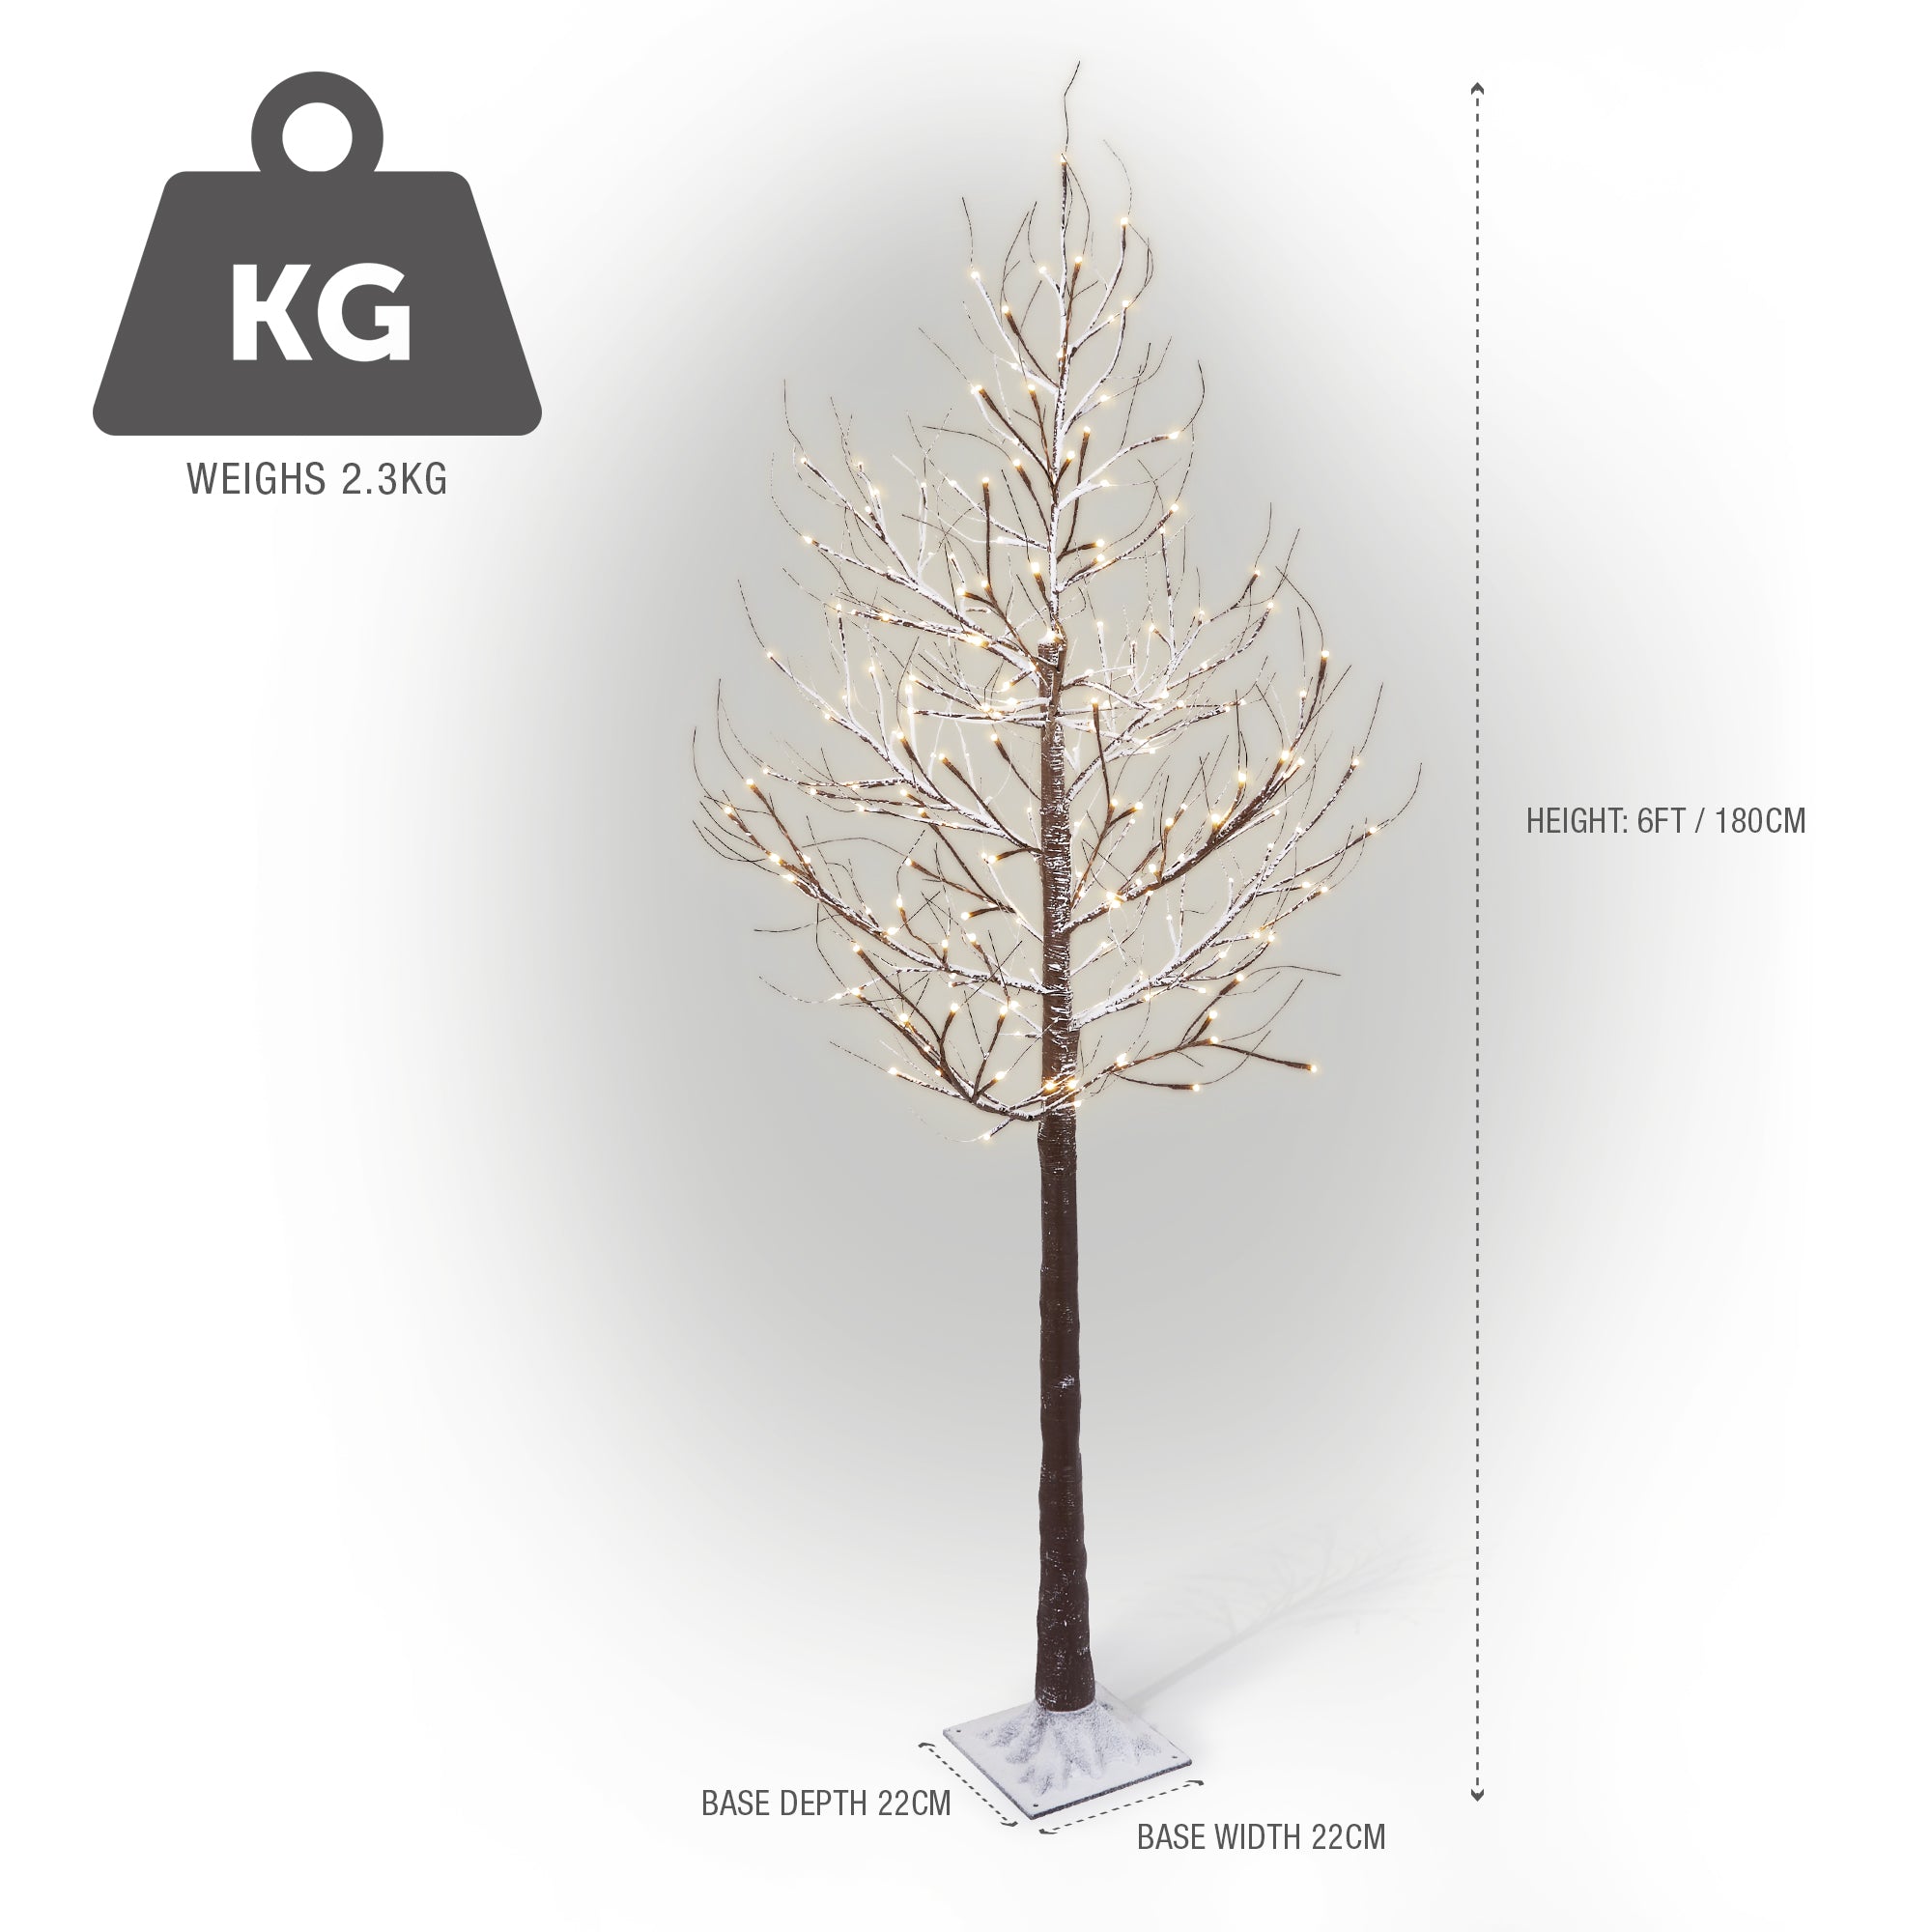 NETTA Birch Twig Tree with Warm White LED Lights - Brown